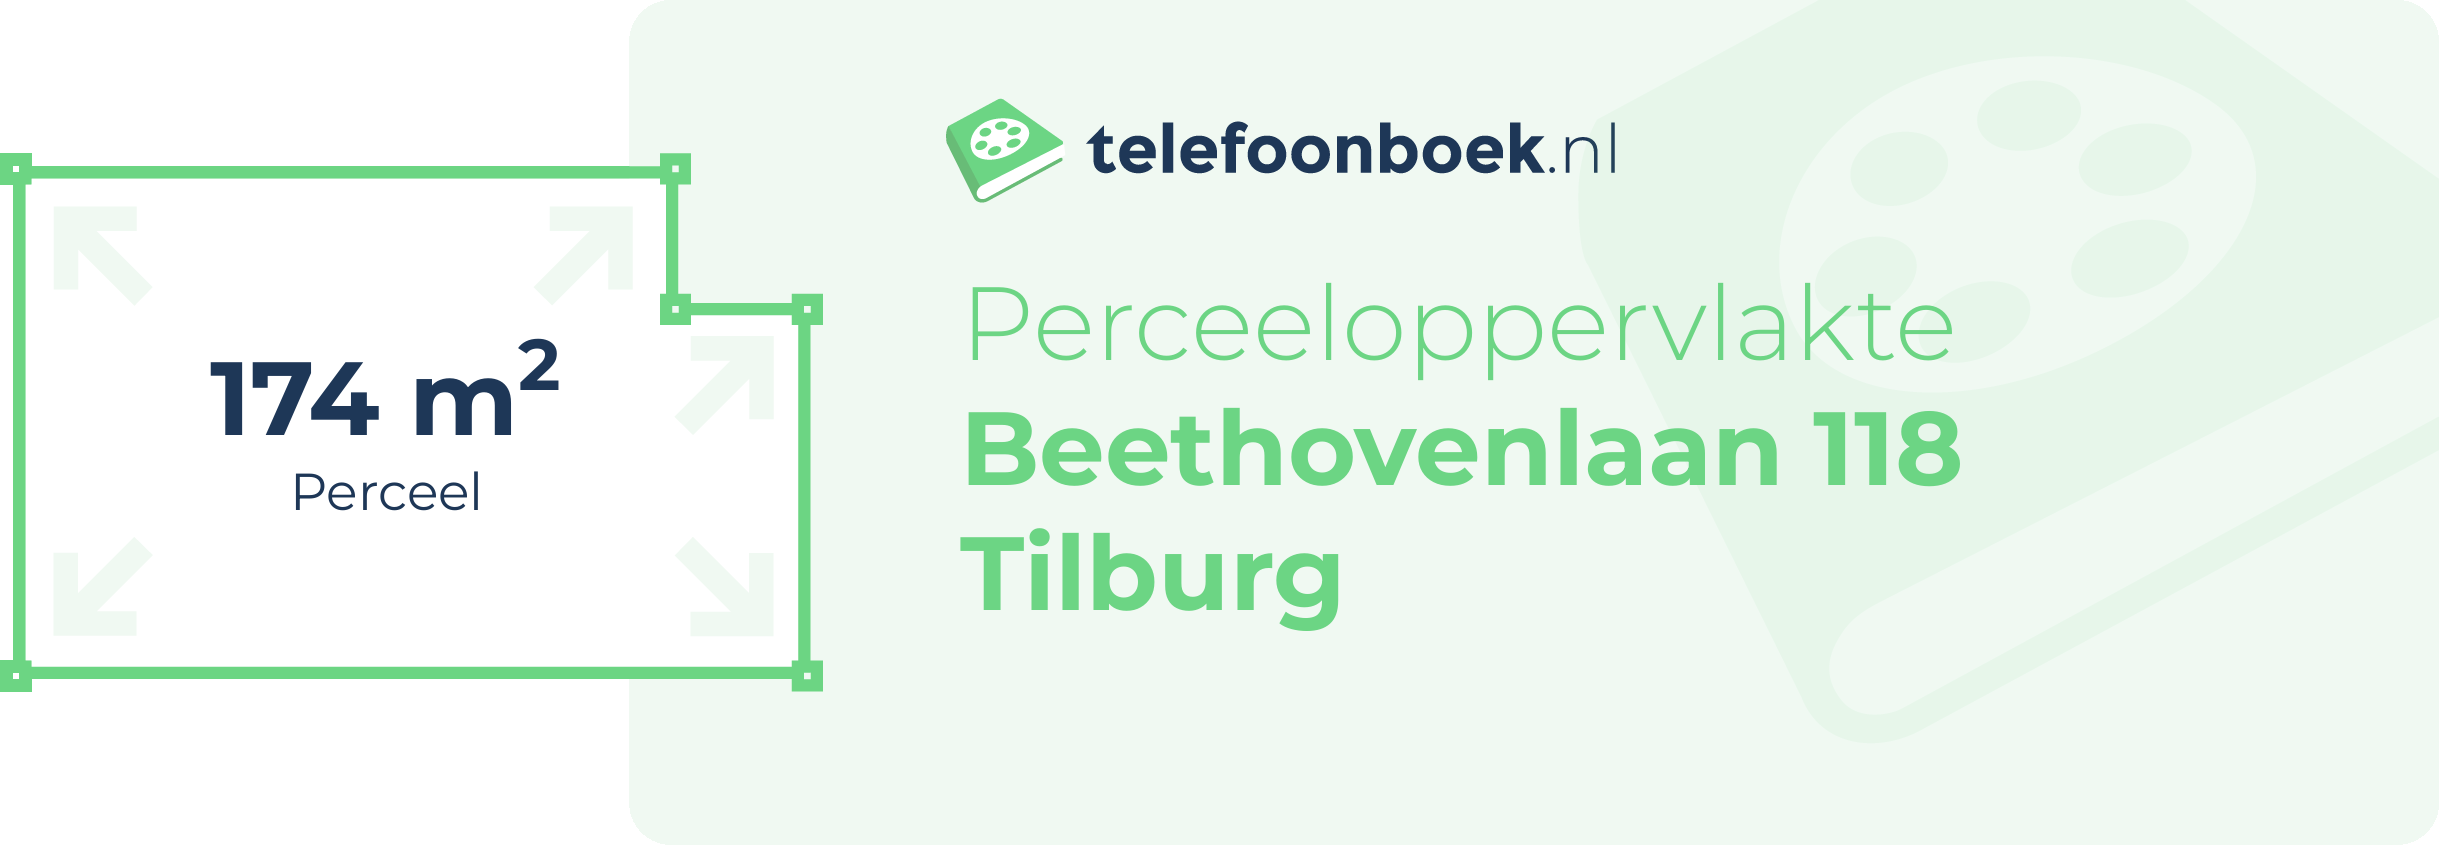 Perceeloppervlakte Beethovenlaan 118 Tilburg